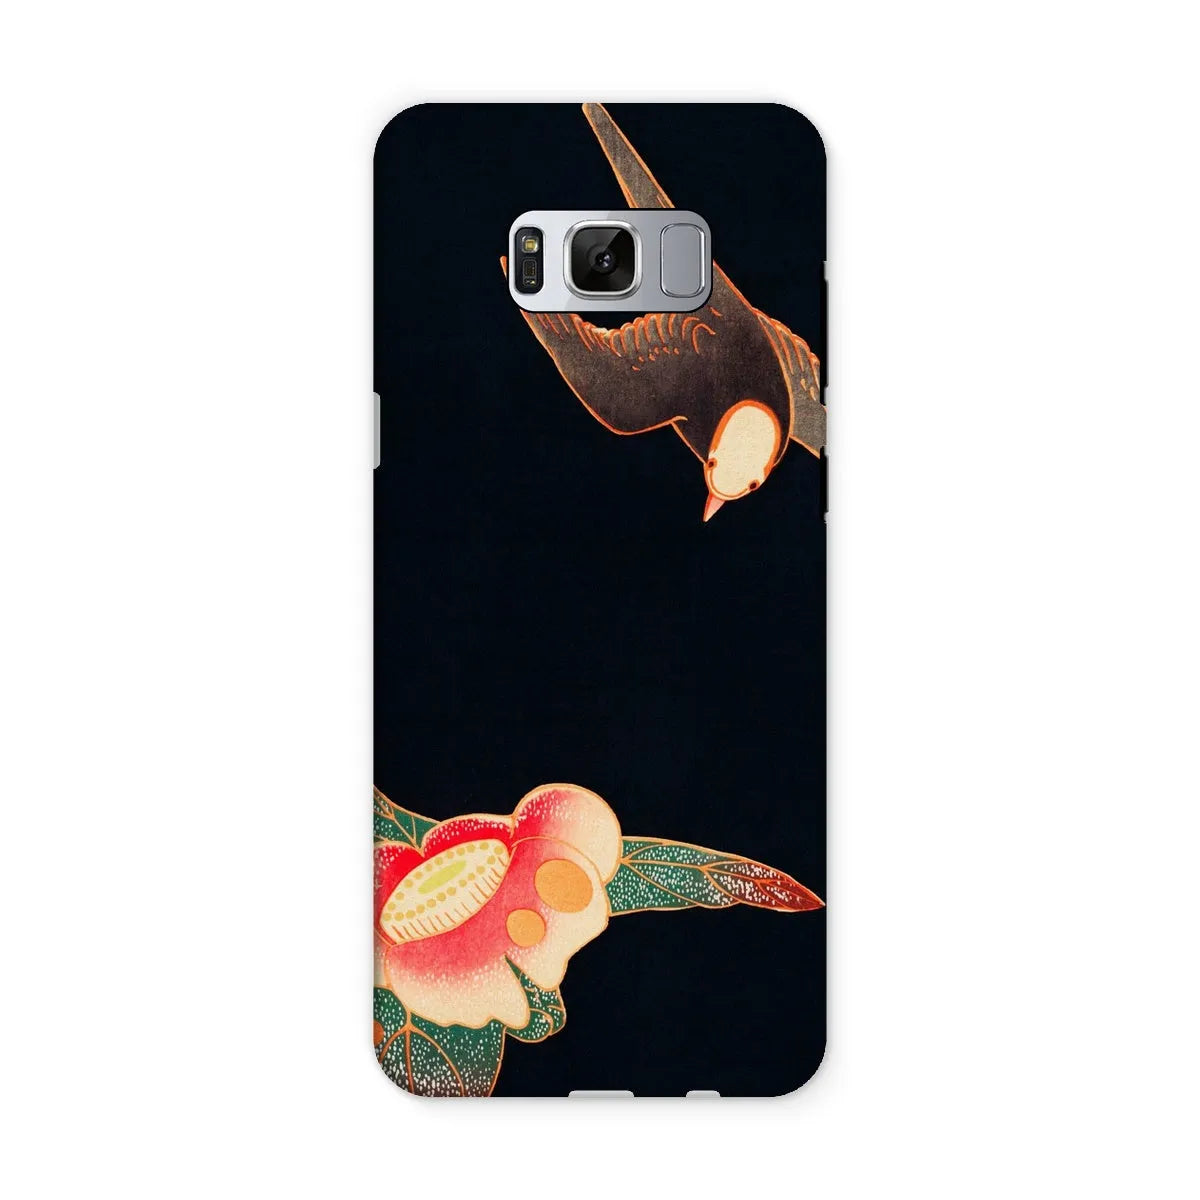 Swallow & Camellia - Meiji Era Art Phone Case - Ito Jakuchu - Samsung Galaxy S8 / Matte - Mobile Phone Cases